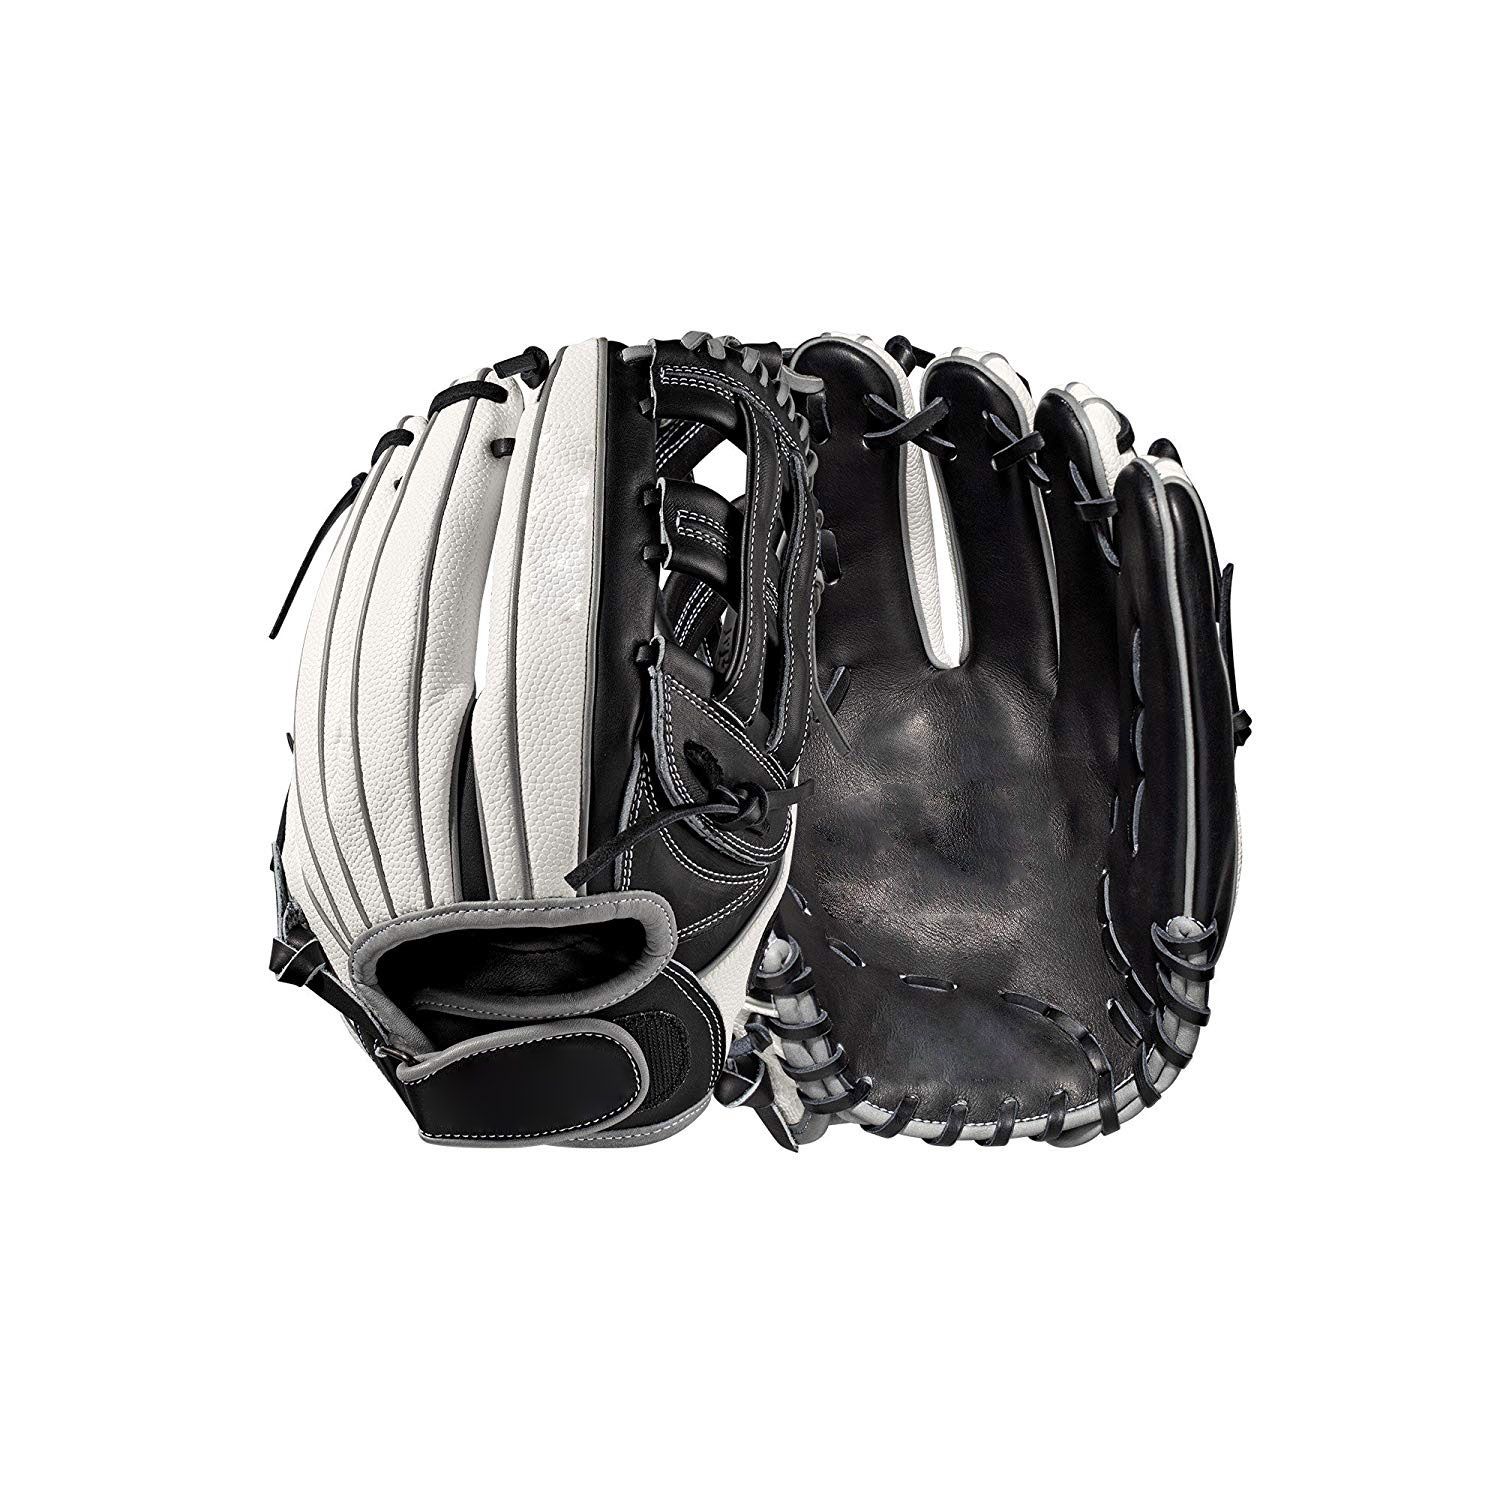 A2000 baseball gloves white infield baseball fastpitch glove